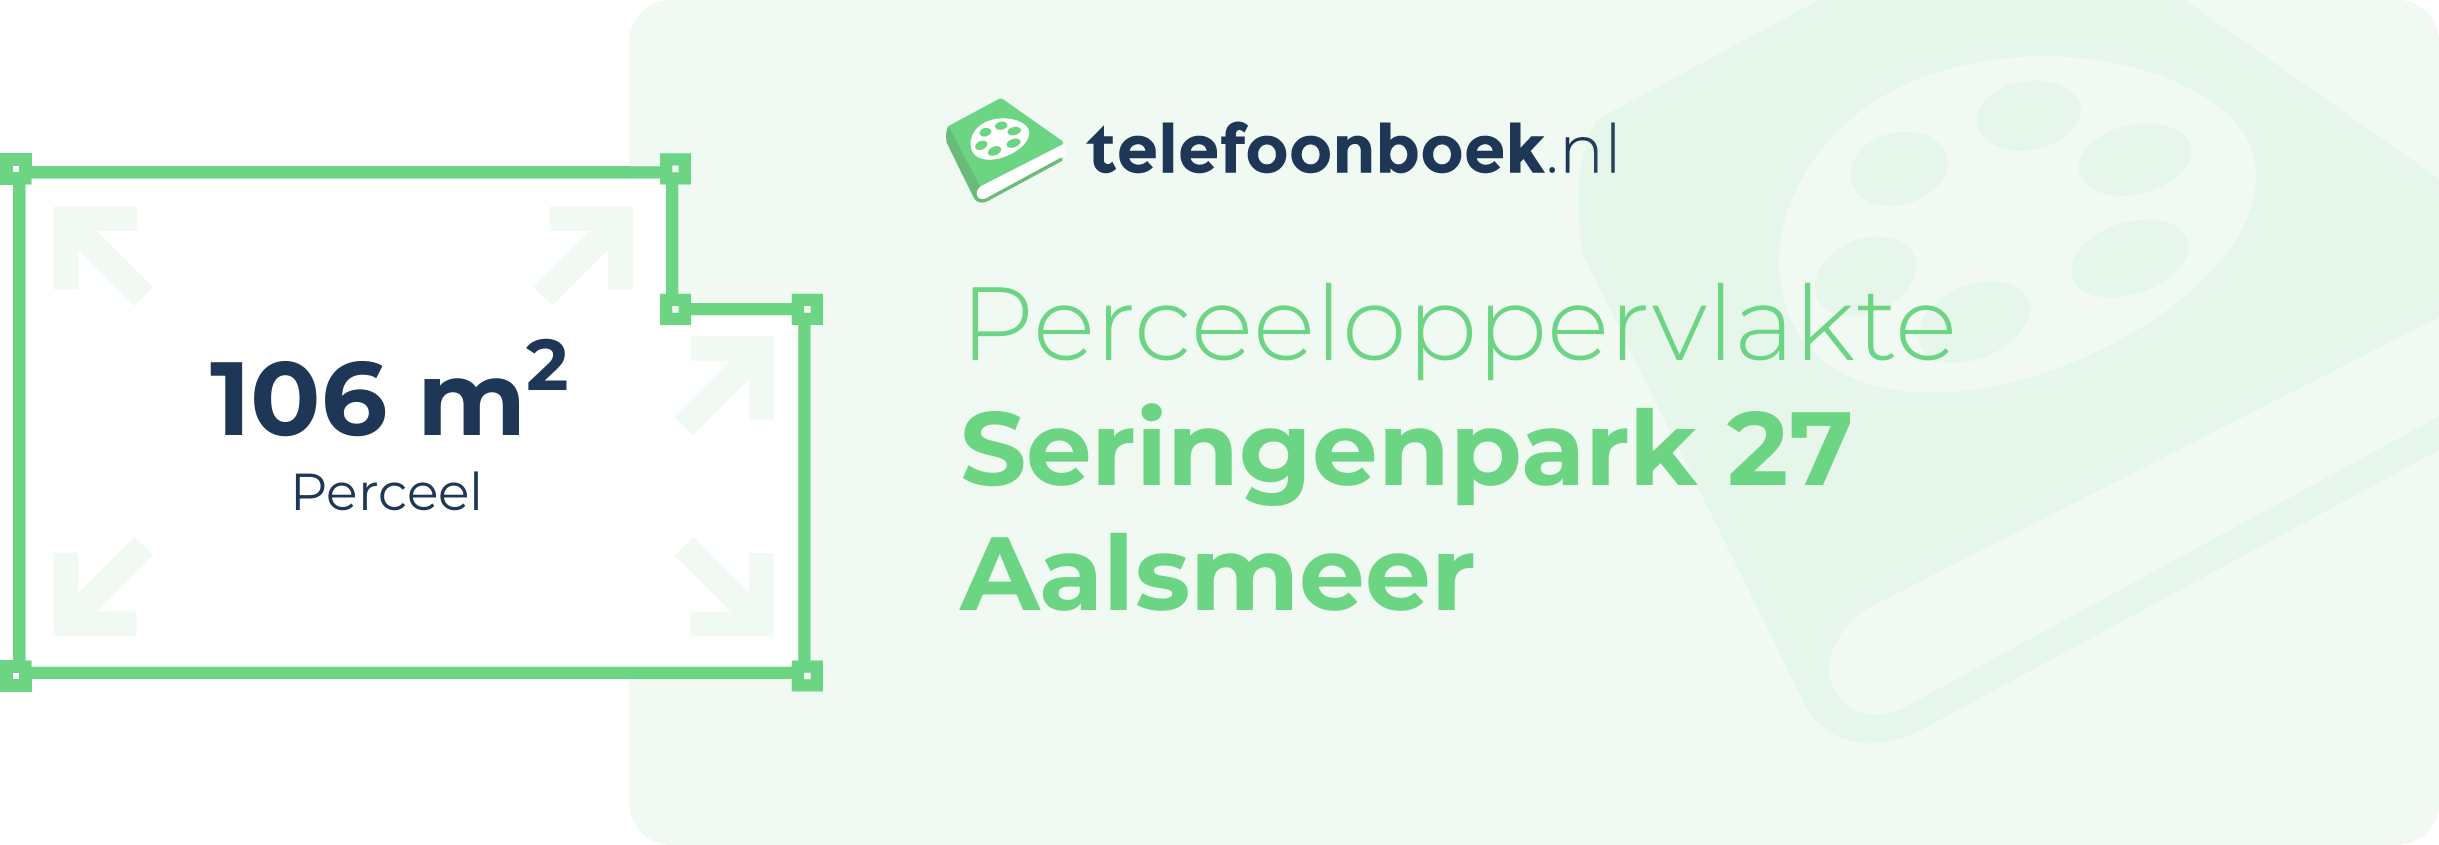 Perceeloppervlakte Seringenpark 27 Aalsmeer